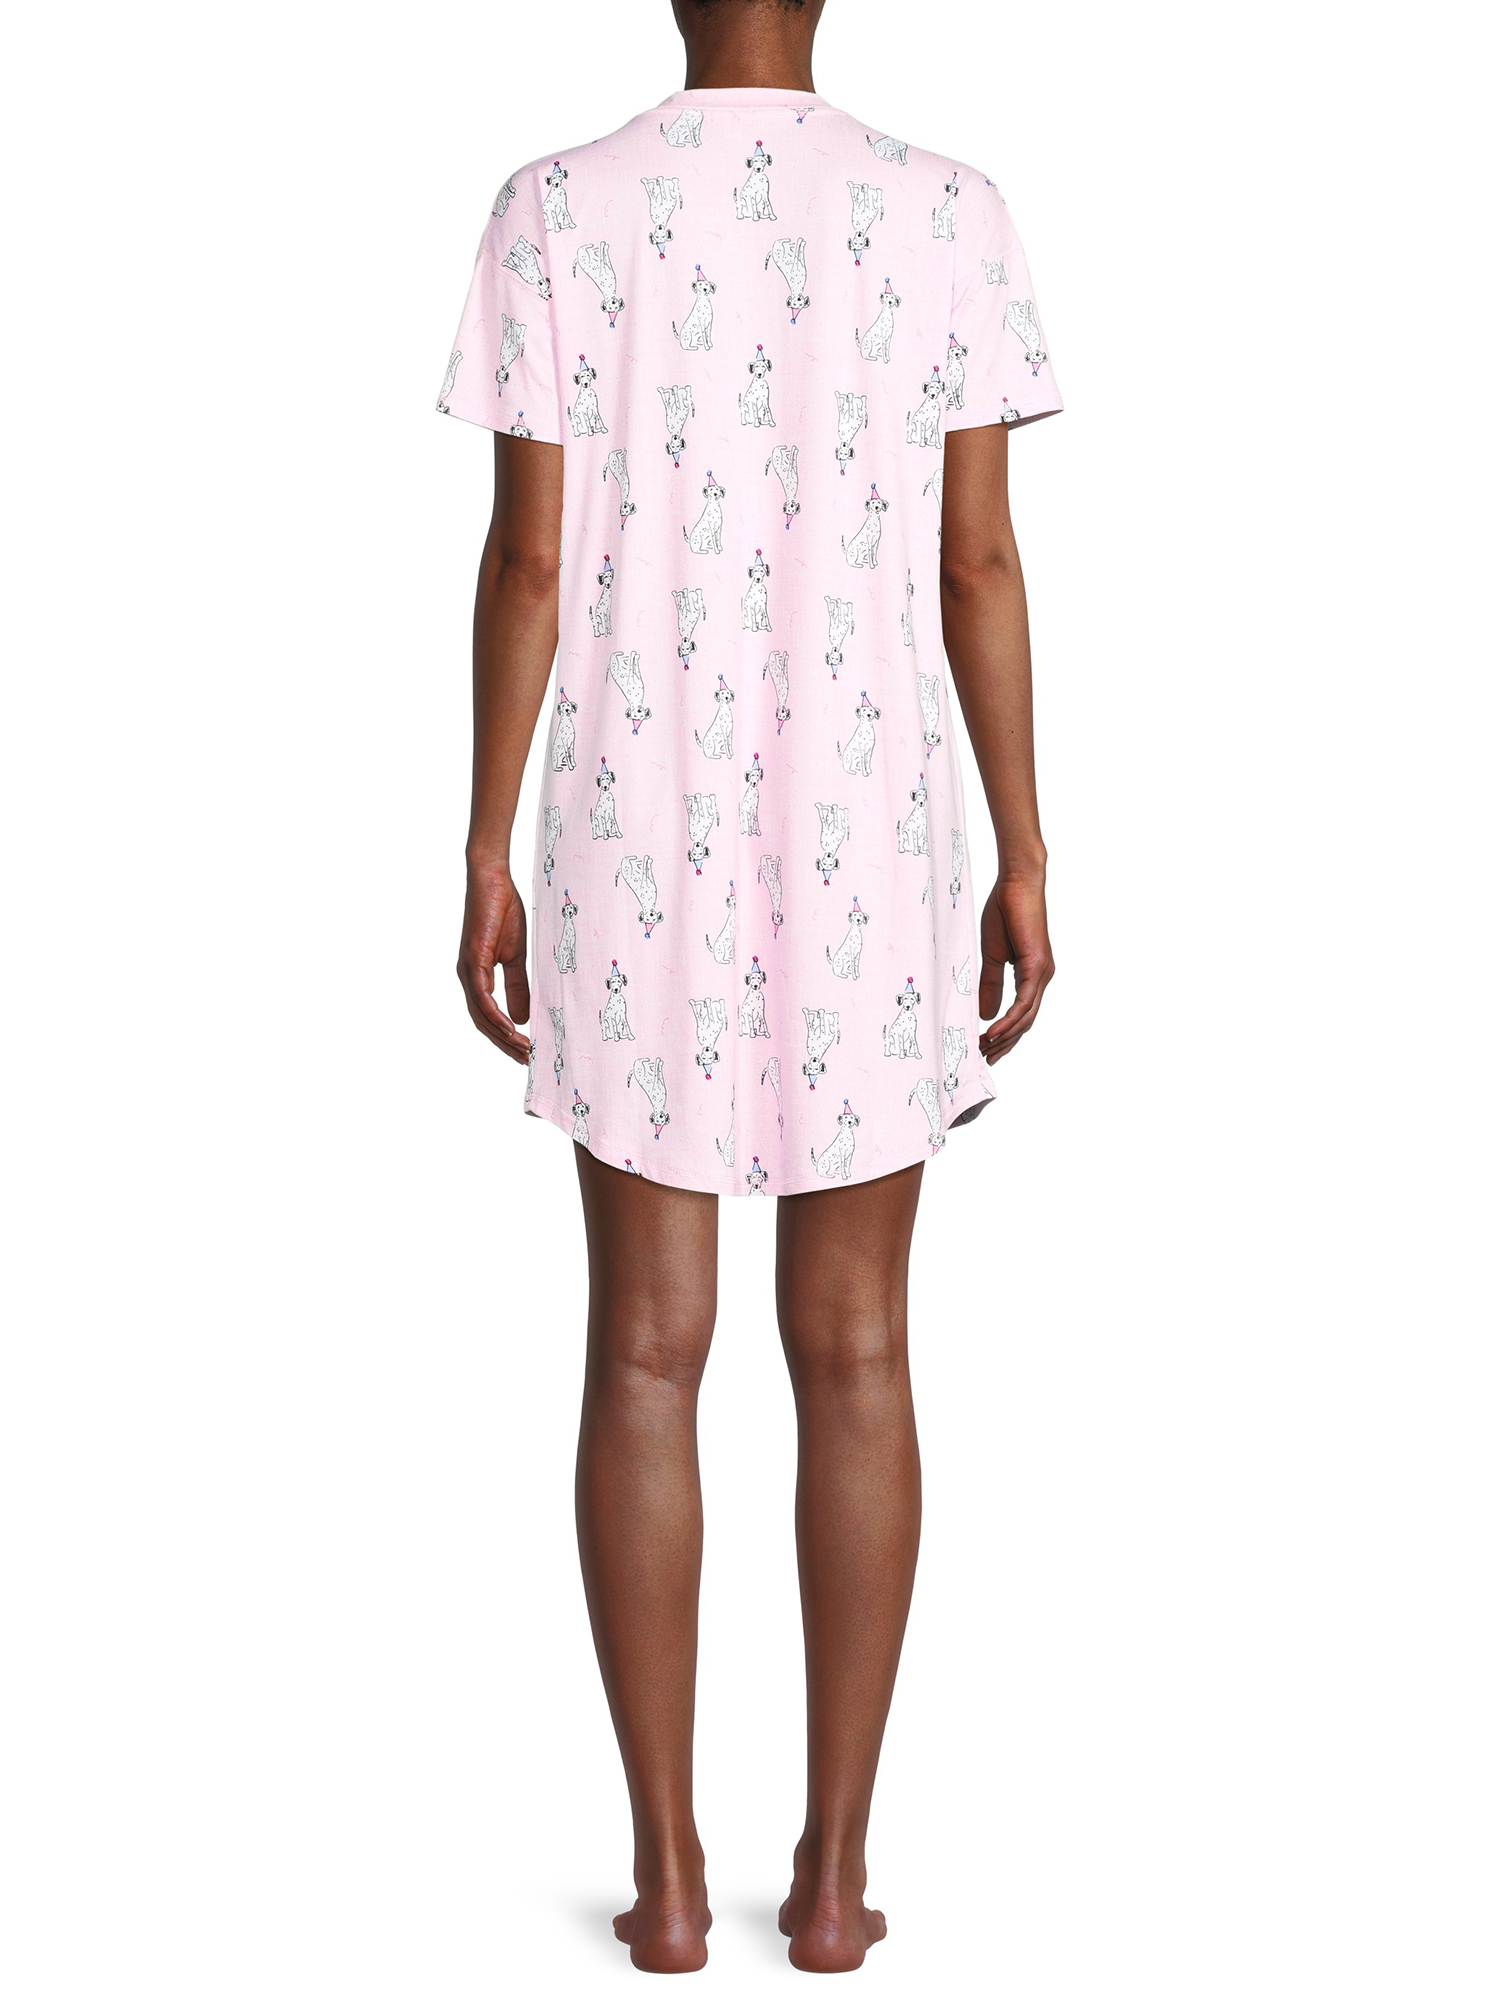 Jaclyn Women’s Hi-Lo Drop Shoulder Sleep Shirt - image 3 of 6